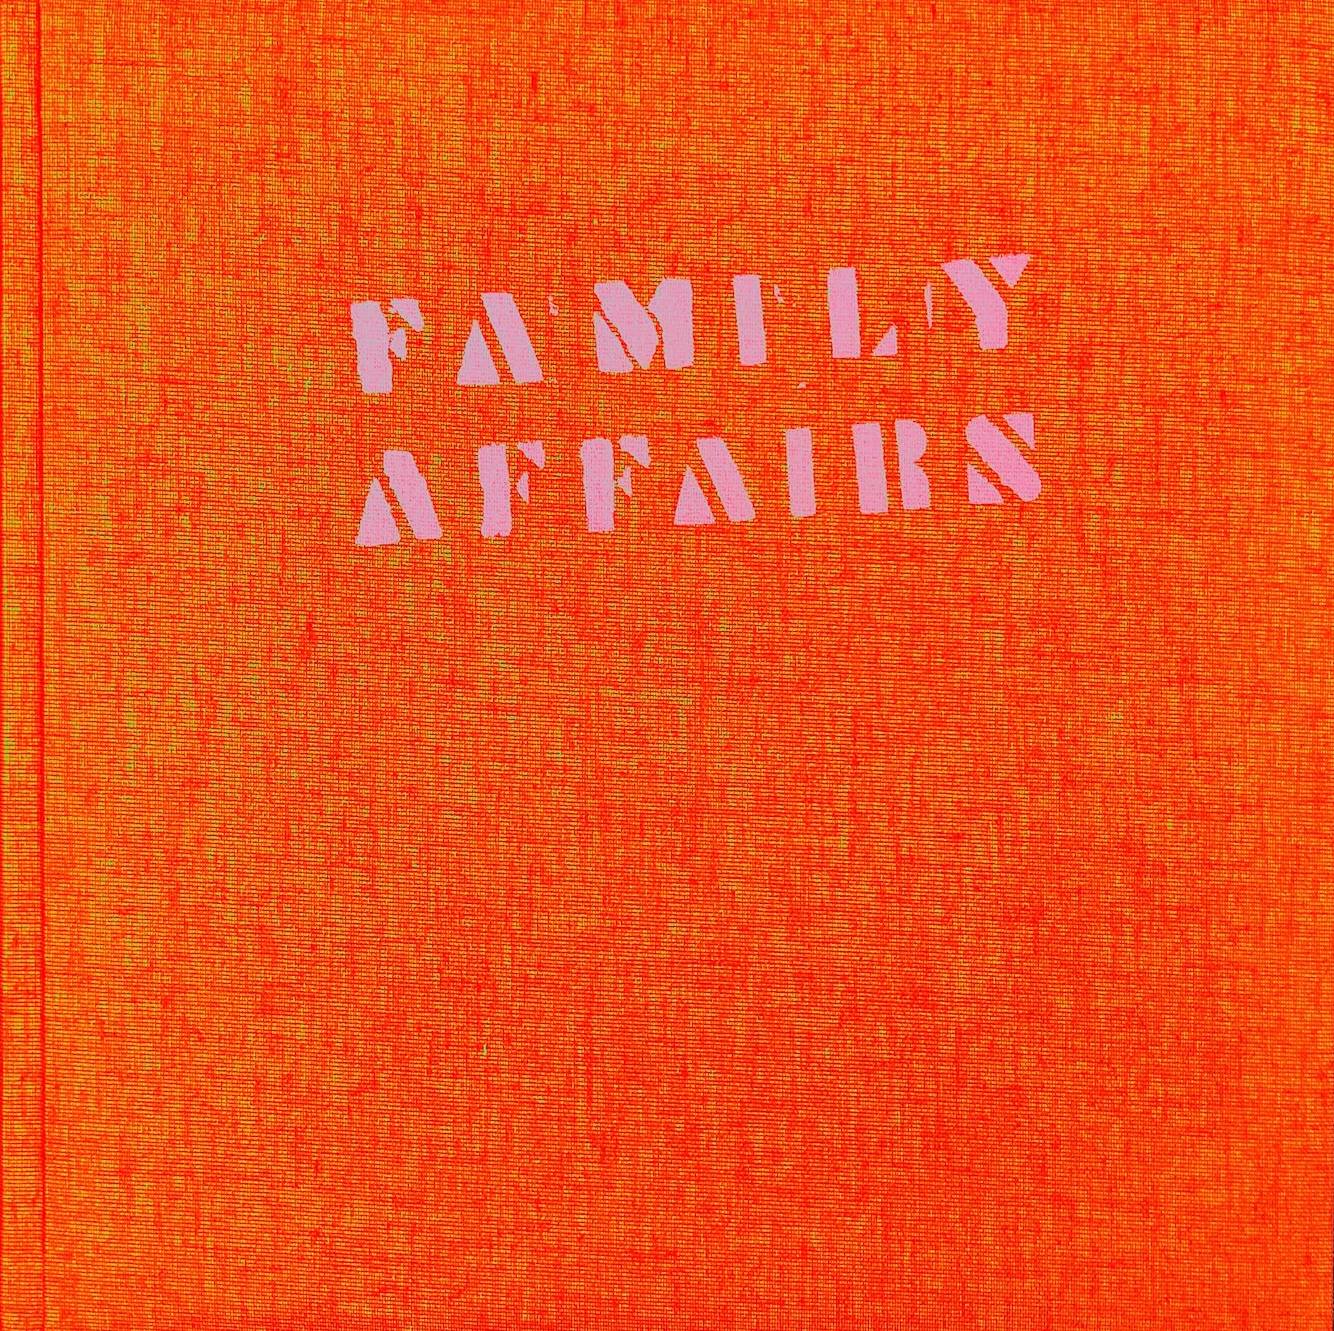 Family affairs